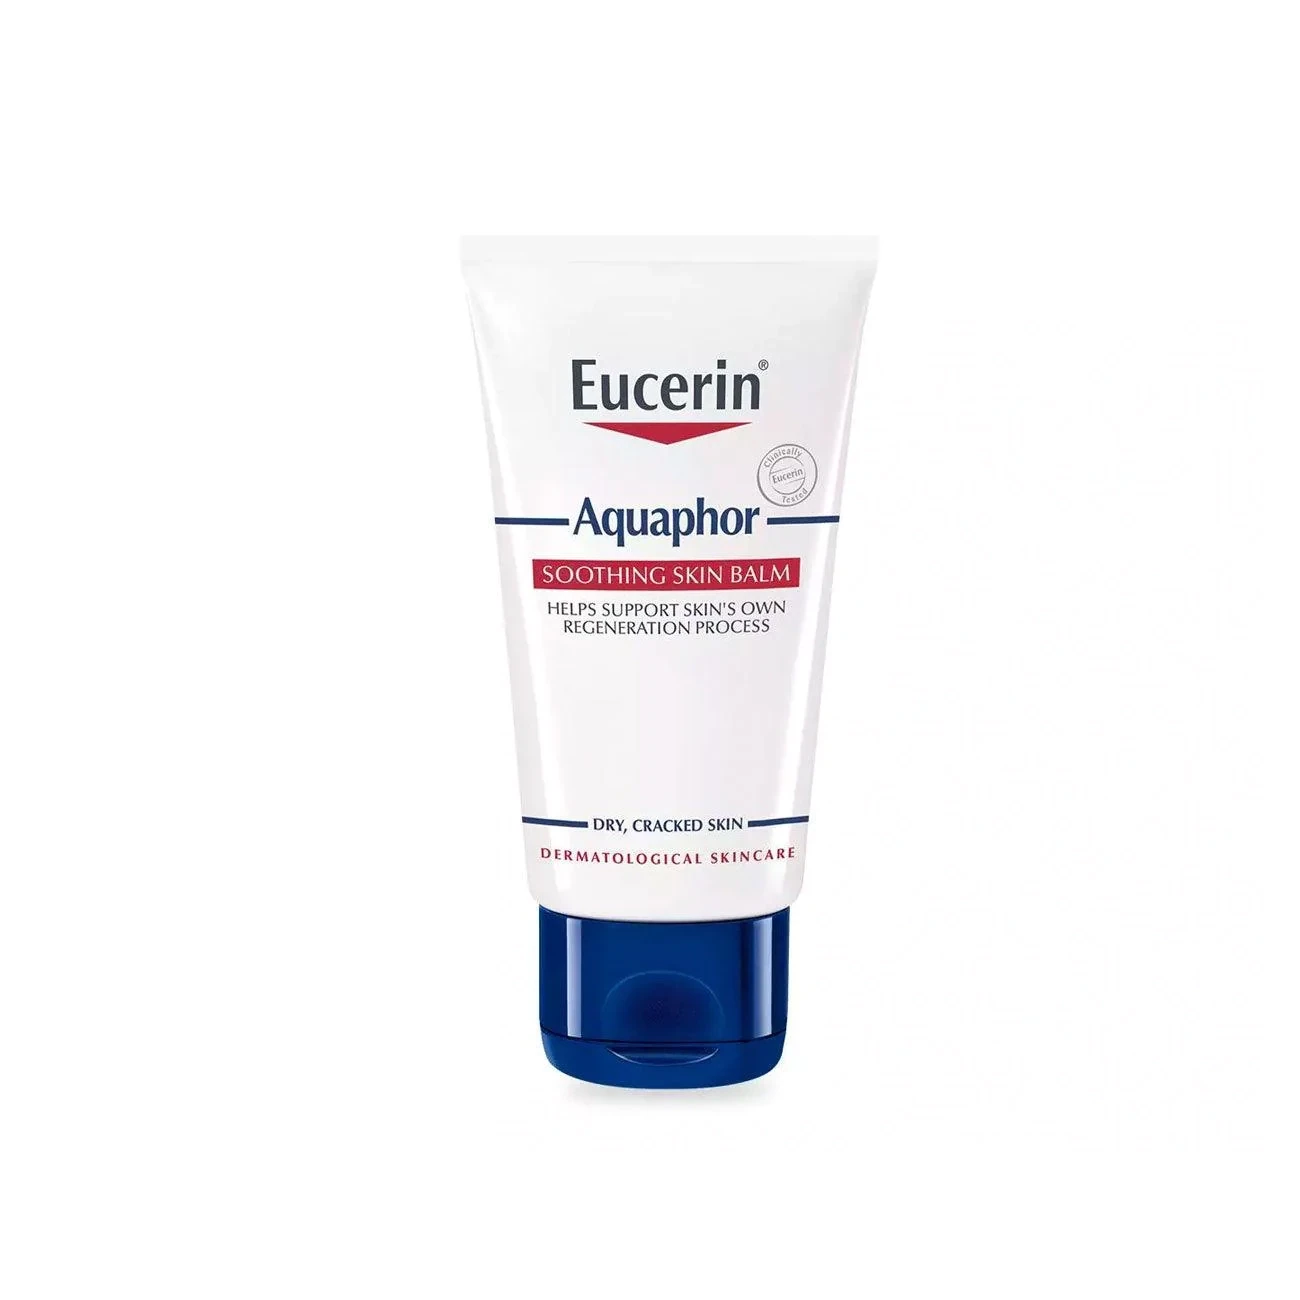 EUCERIN - Aquaphor Soothing Skin Balm - Dry Cracked Skin | 45 mL